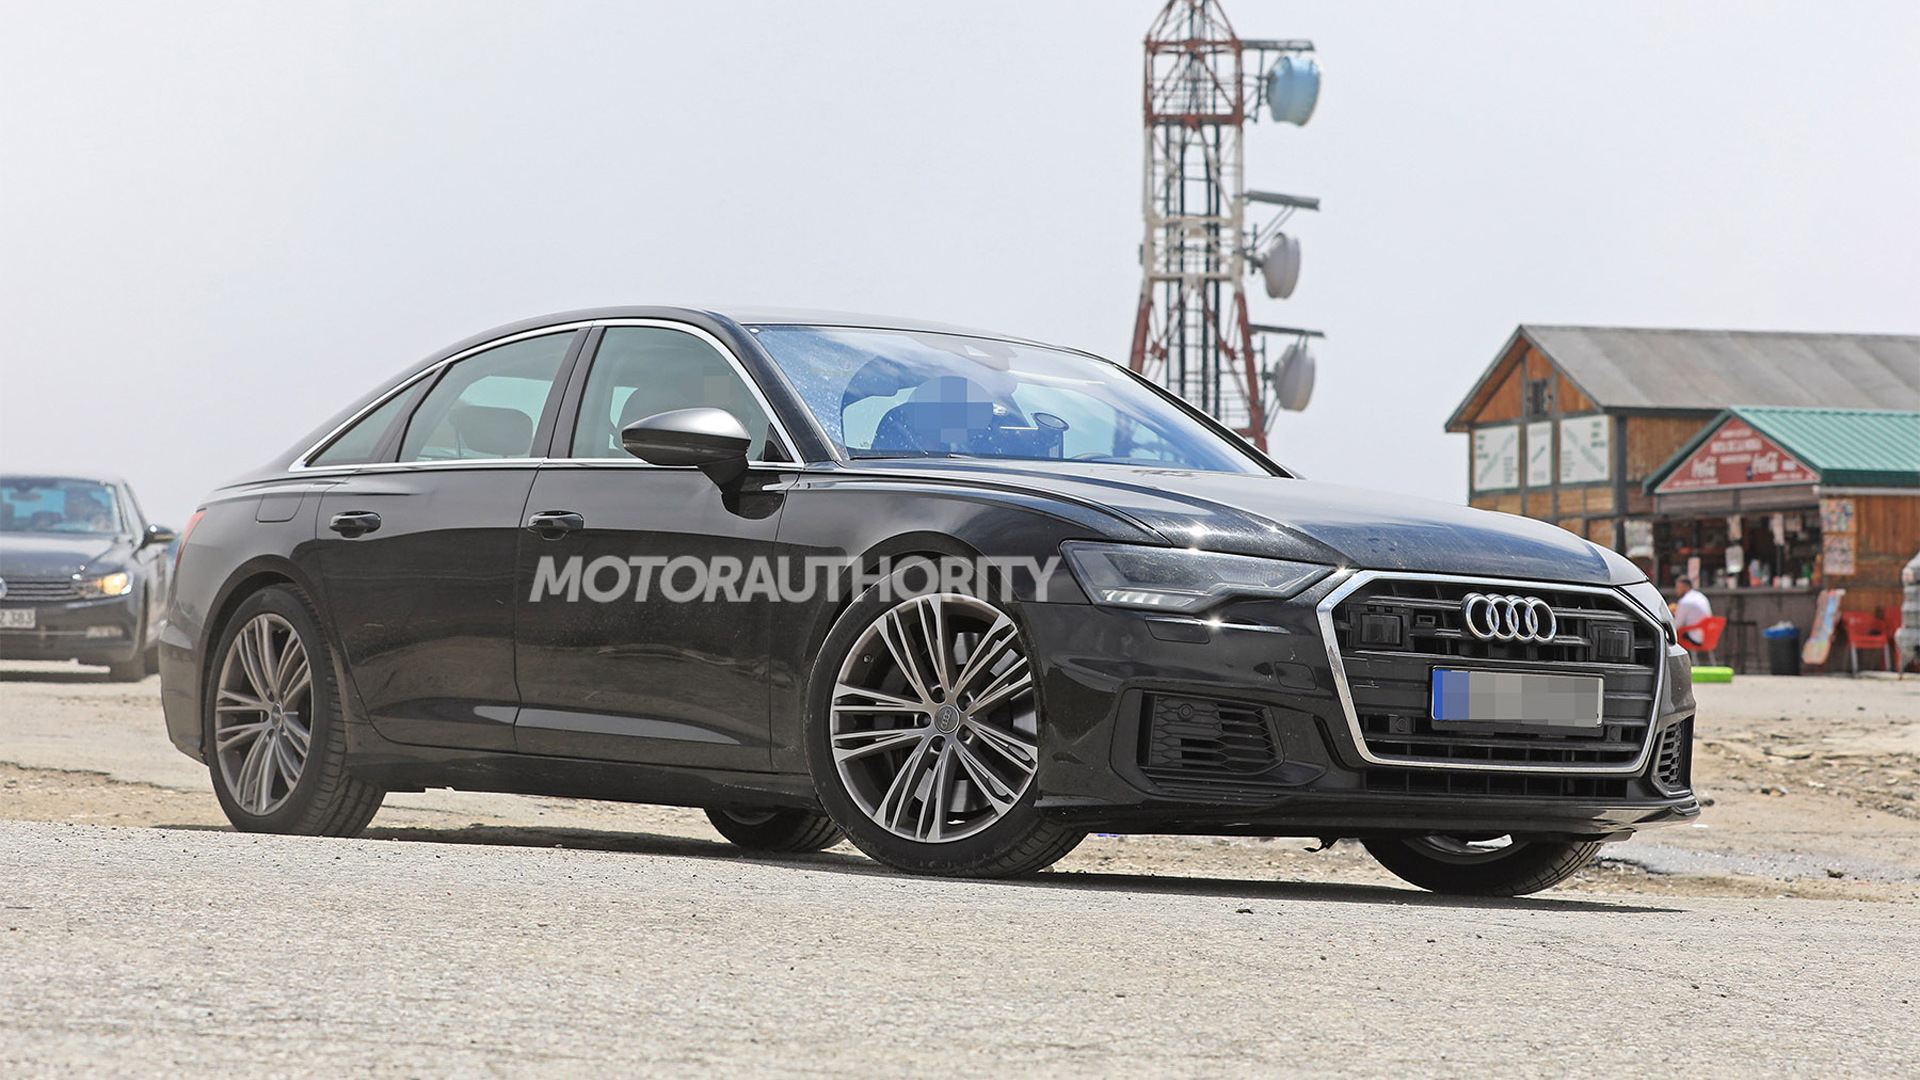 2019 Audi S6 spy shots - Image via S. Baldauf/SB-Medien